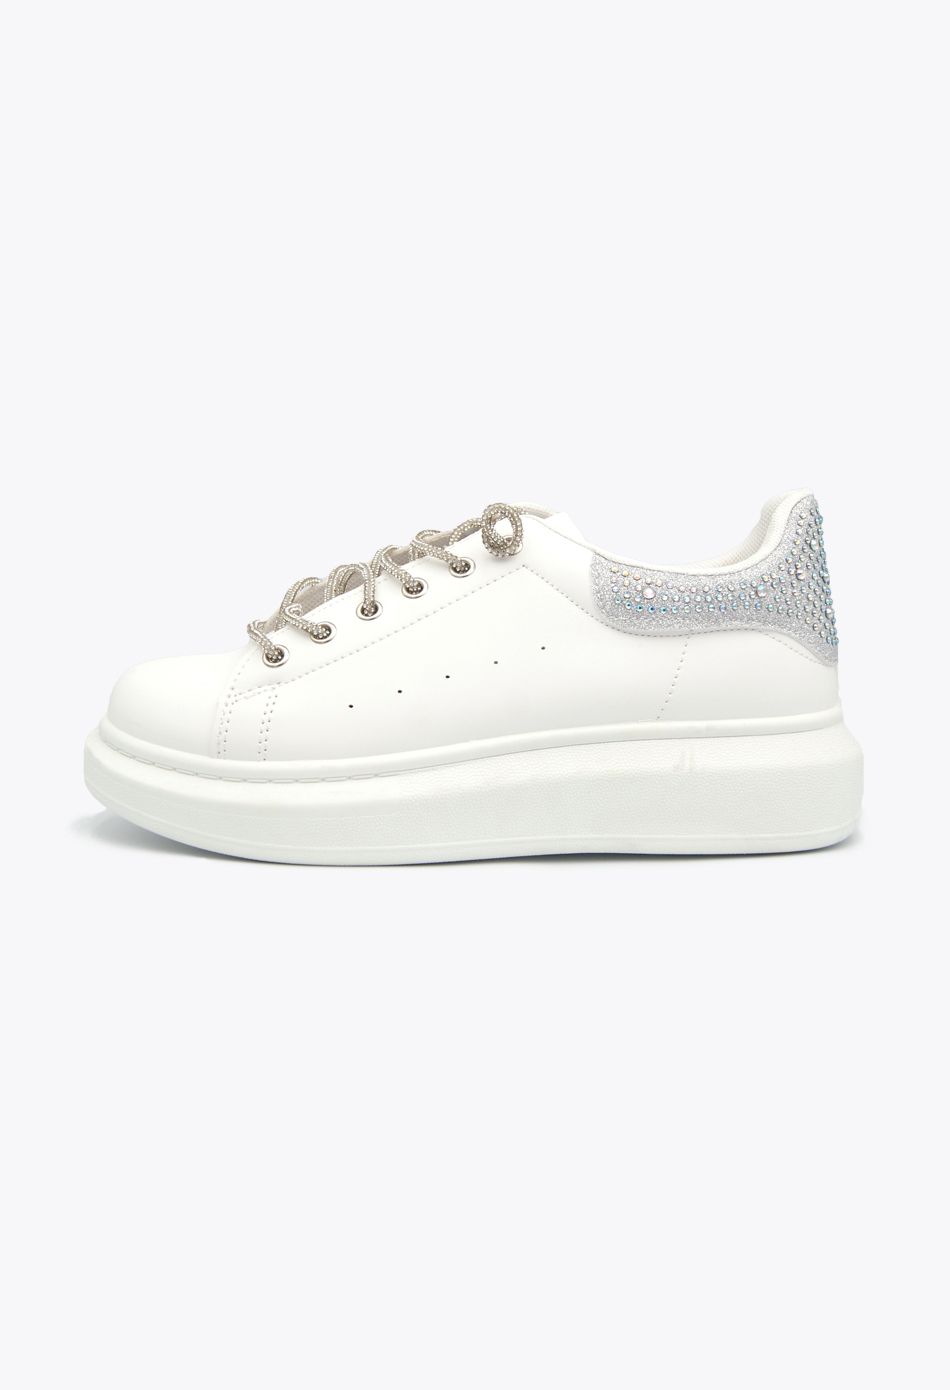 Casual δίπατα sneakers με στρας Λευκό / C8962-white Γυναικεία Αθλητικά και Sneakers joya.gr